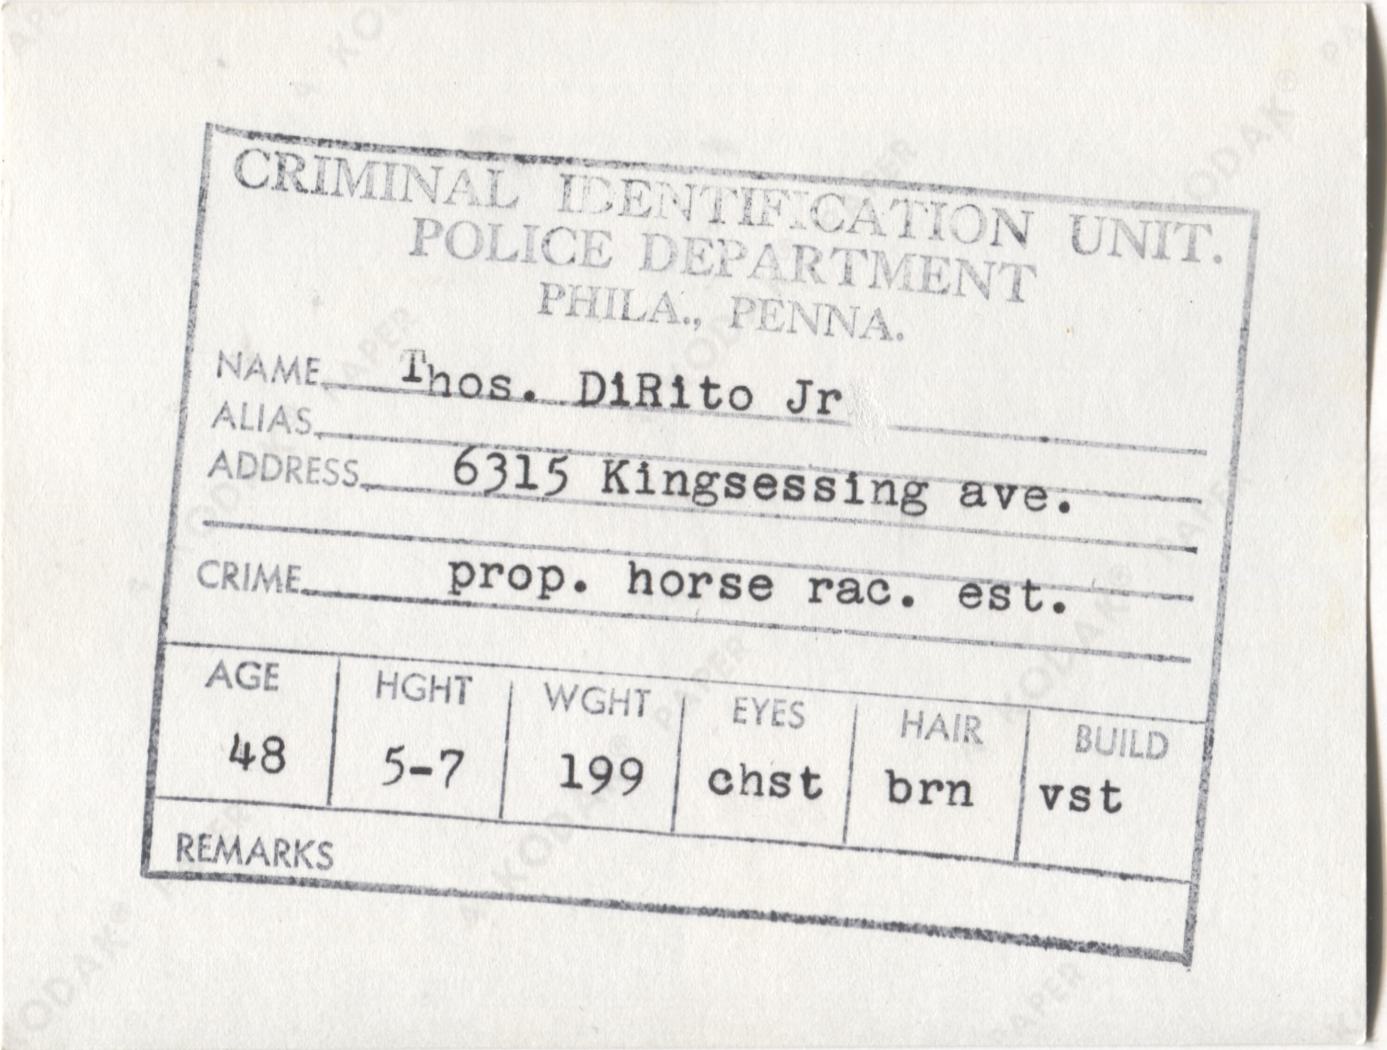 Thomas DiRito Jr. Mugshot - Arrested on 2/28/1964 for Being a Proprietor of a Horse Racing Establishment